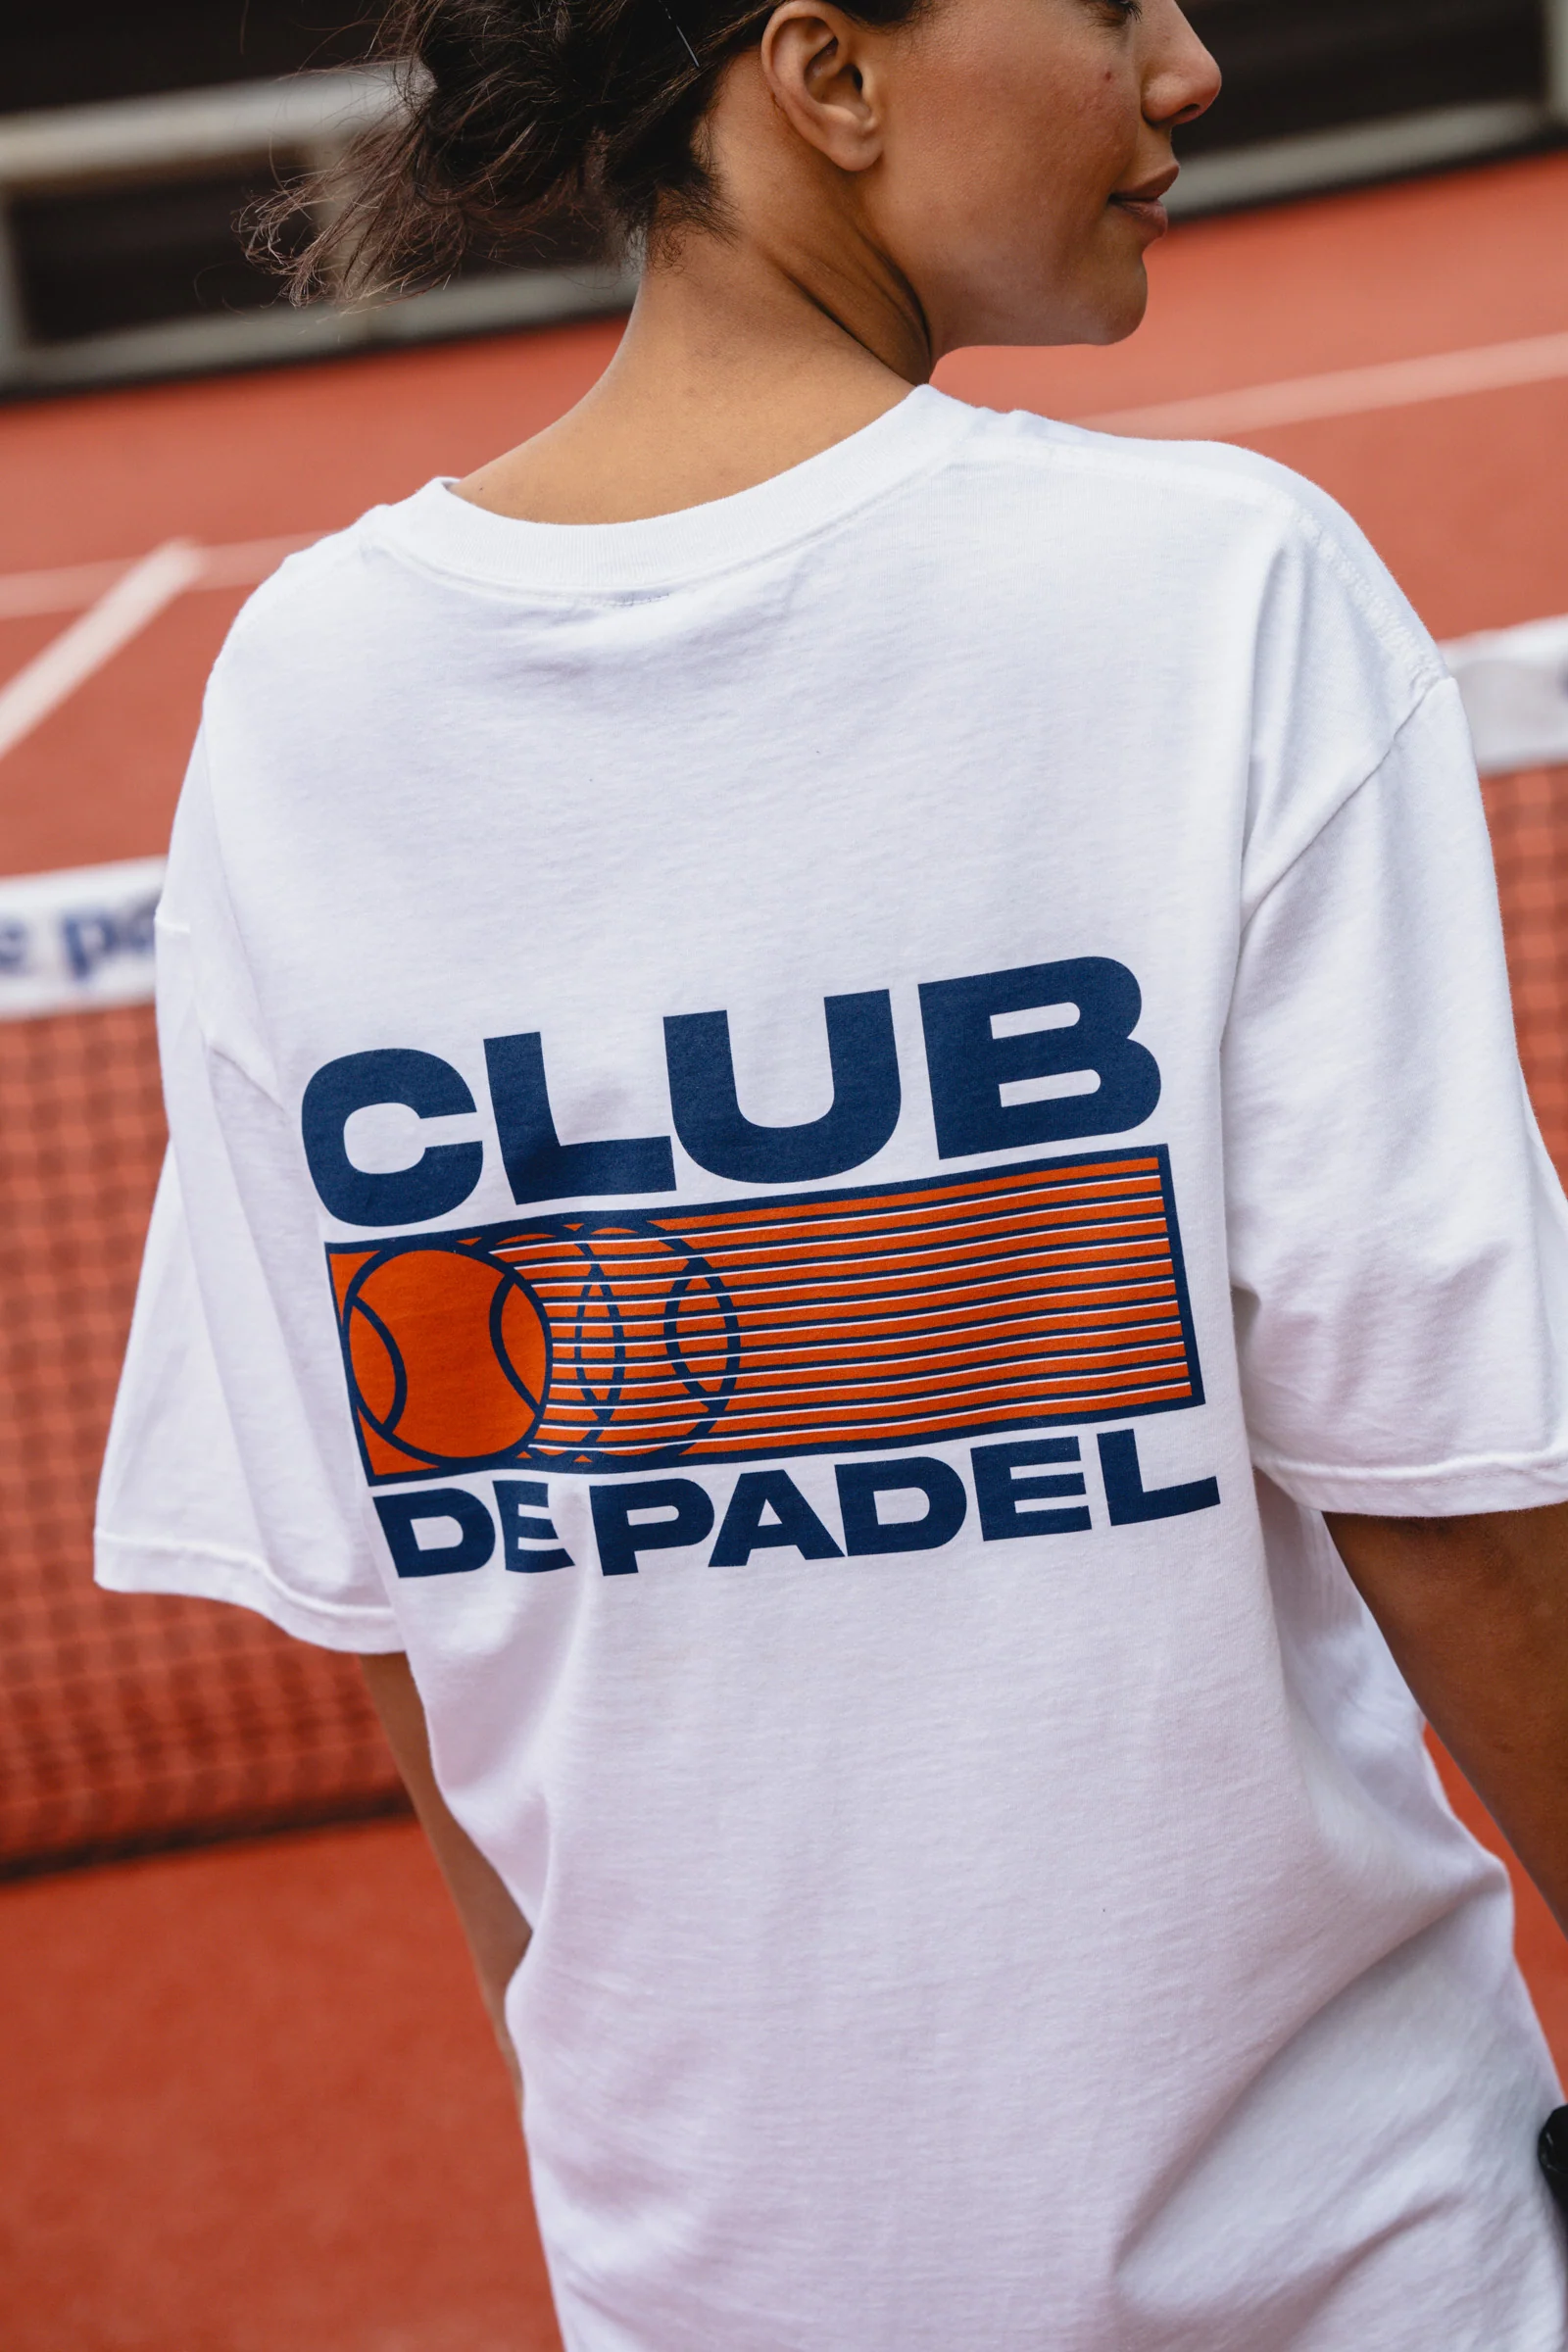 Club de Padel's t-shirt created by Manchester brand UN:IK